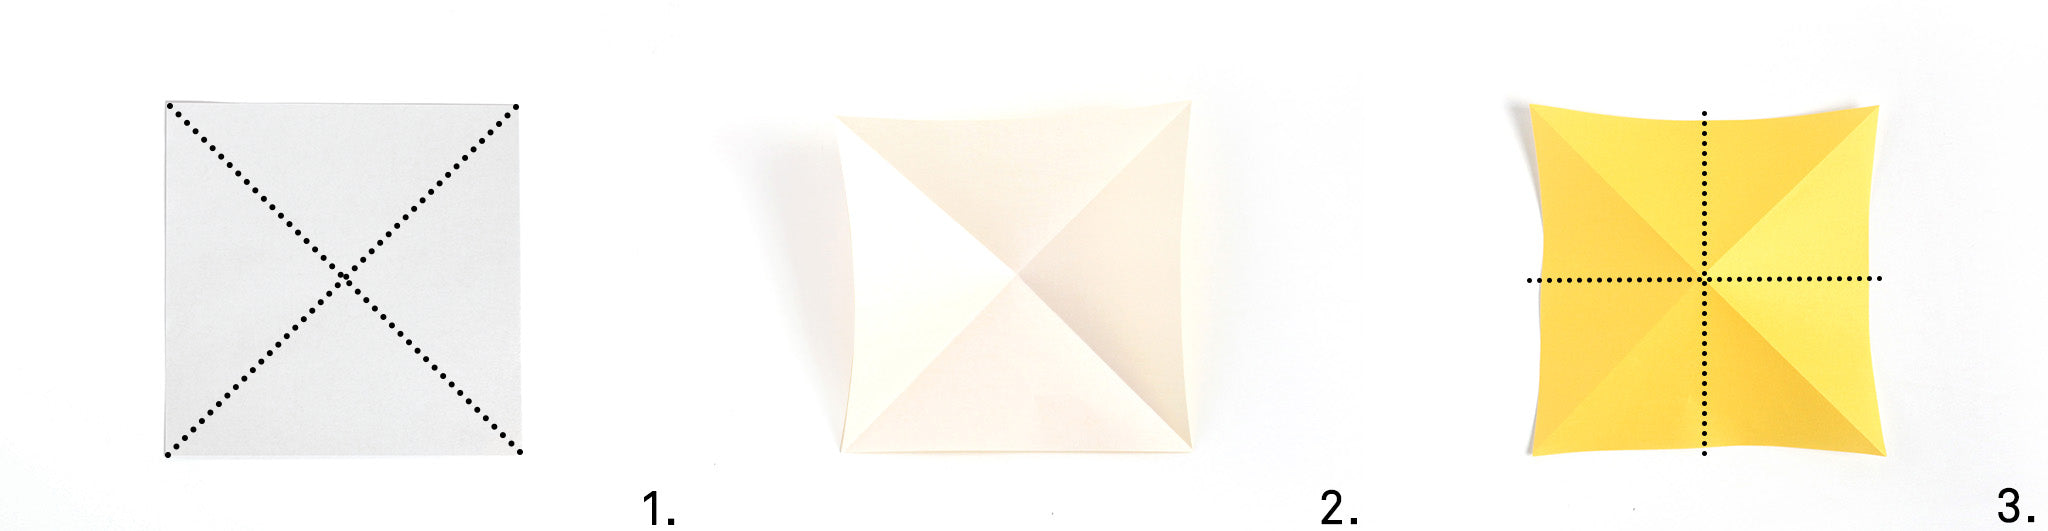 blog-tuto-guirlande-lumineuse-origami-etapes-1-3.jpg